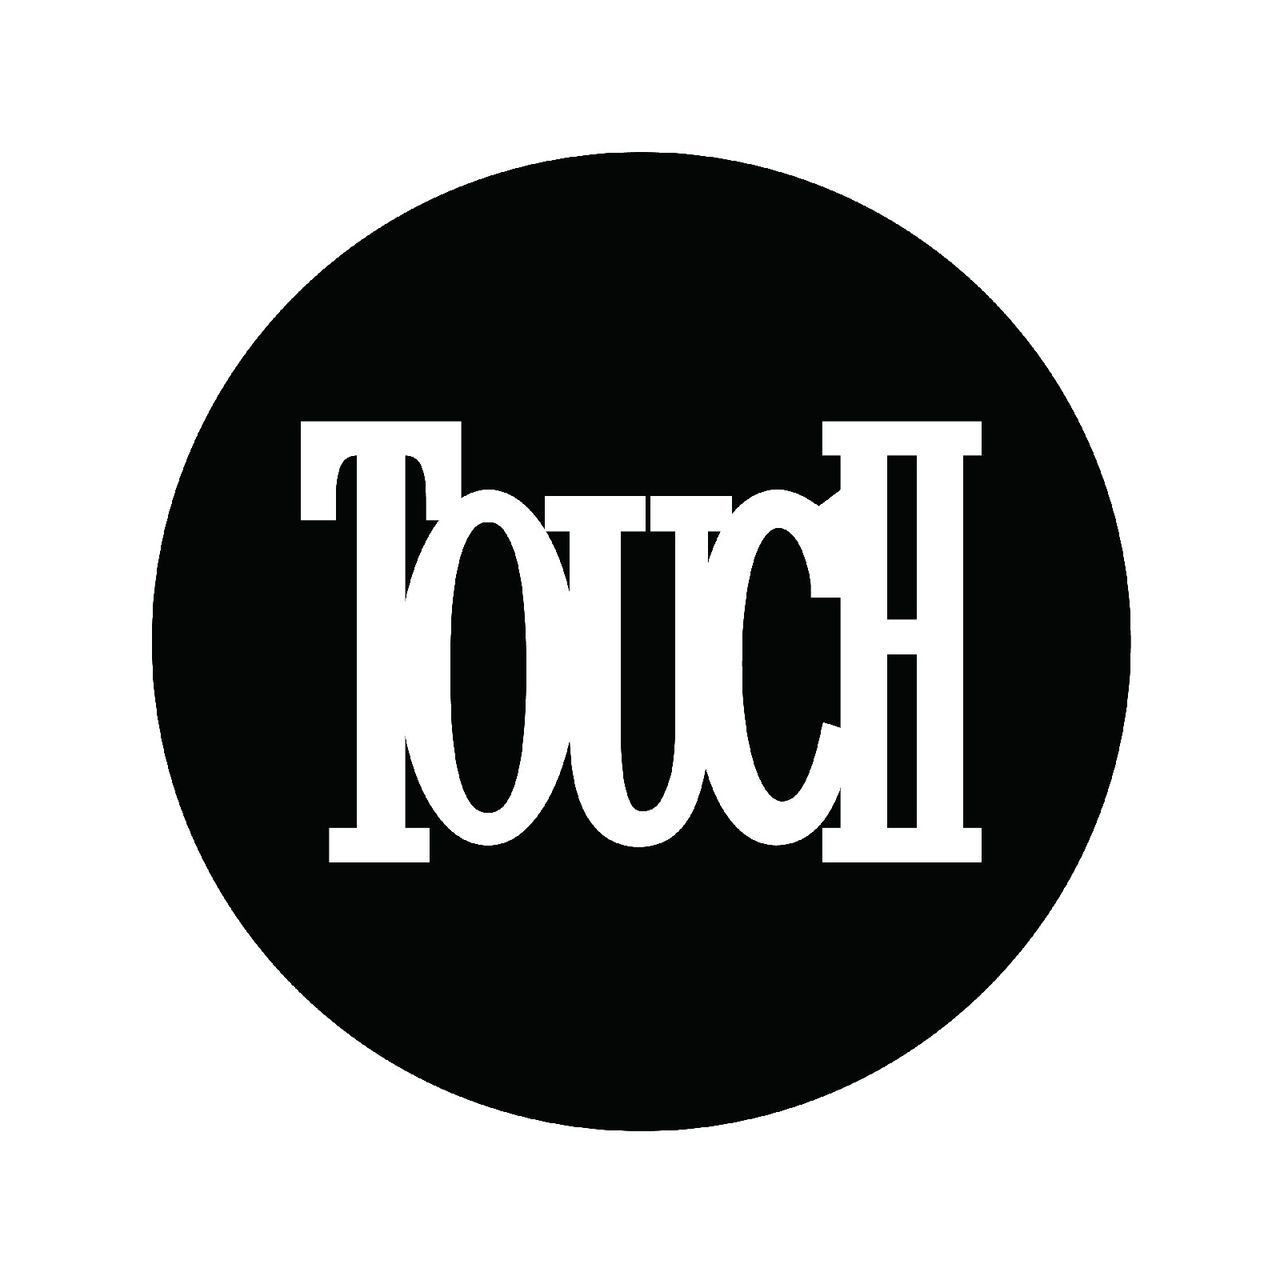 Touch(女士時裝品牌)